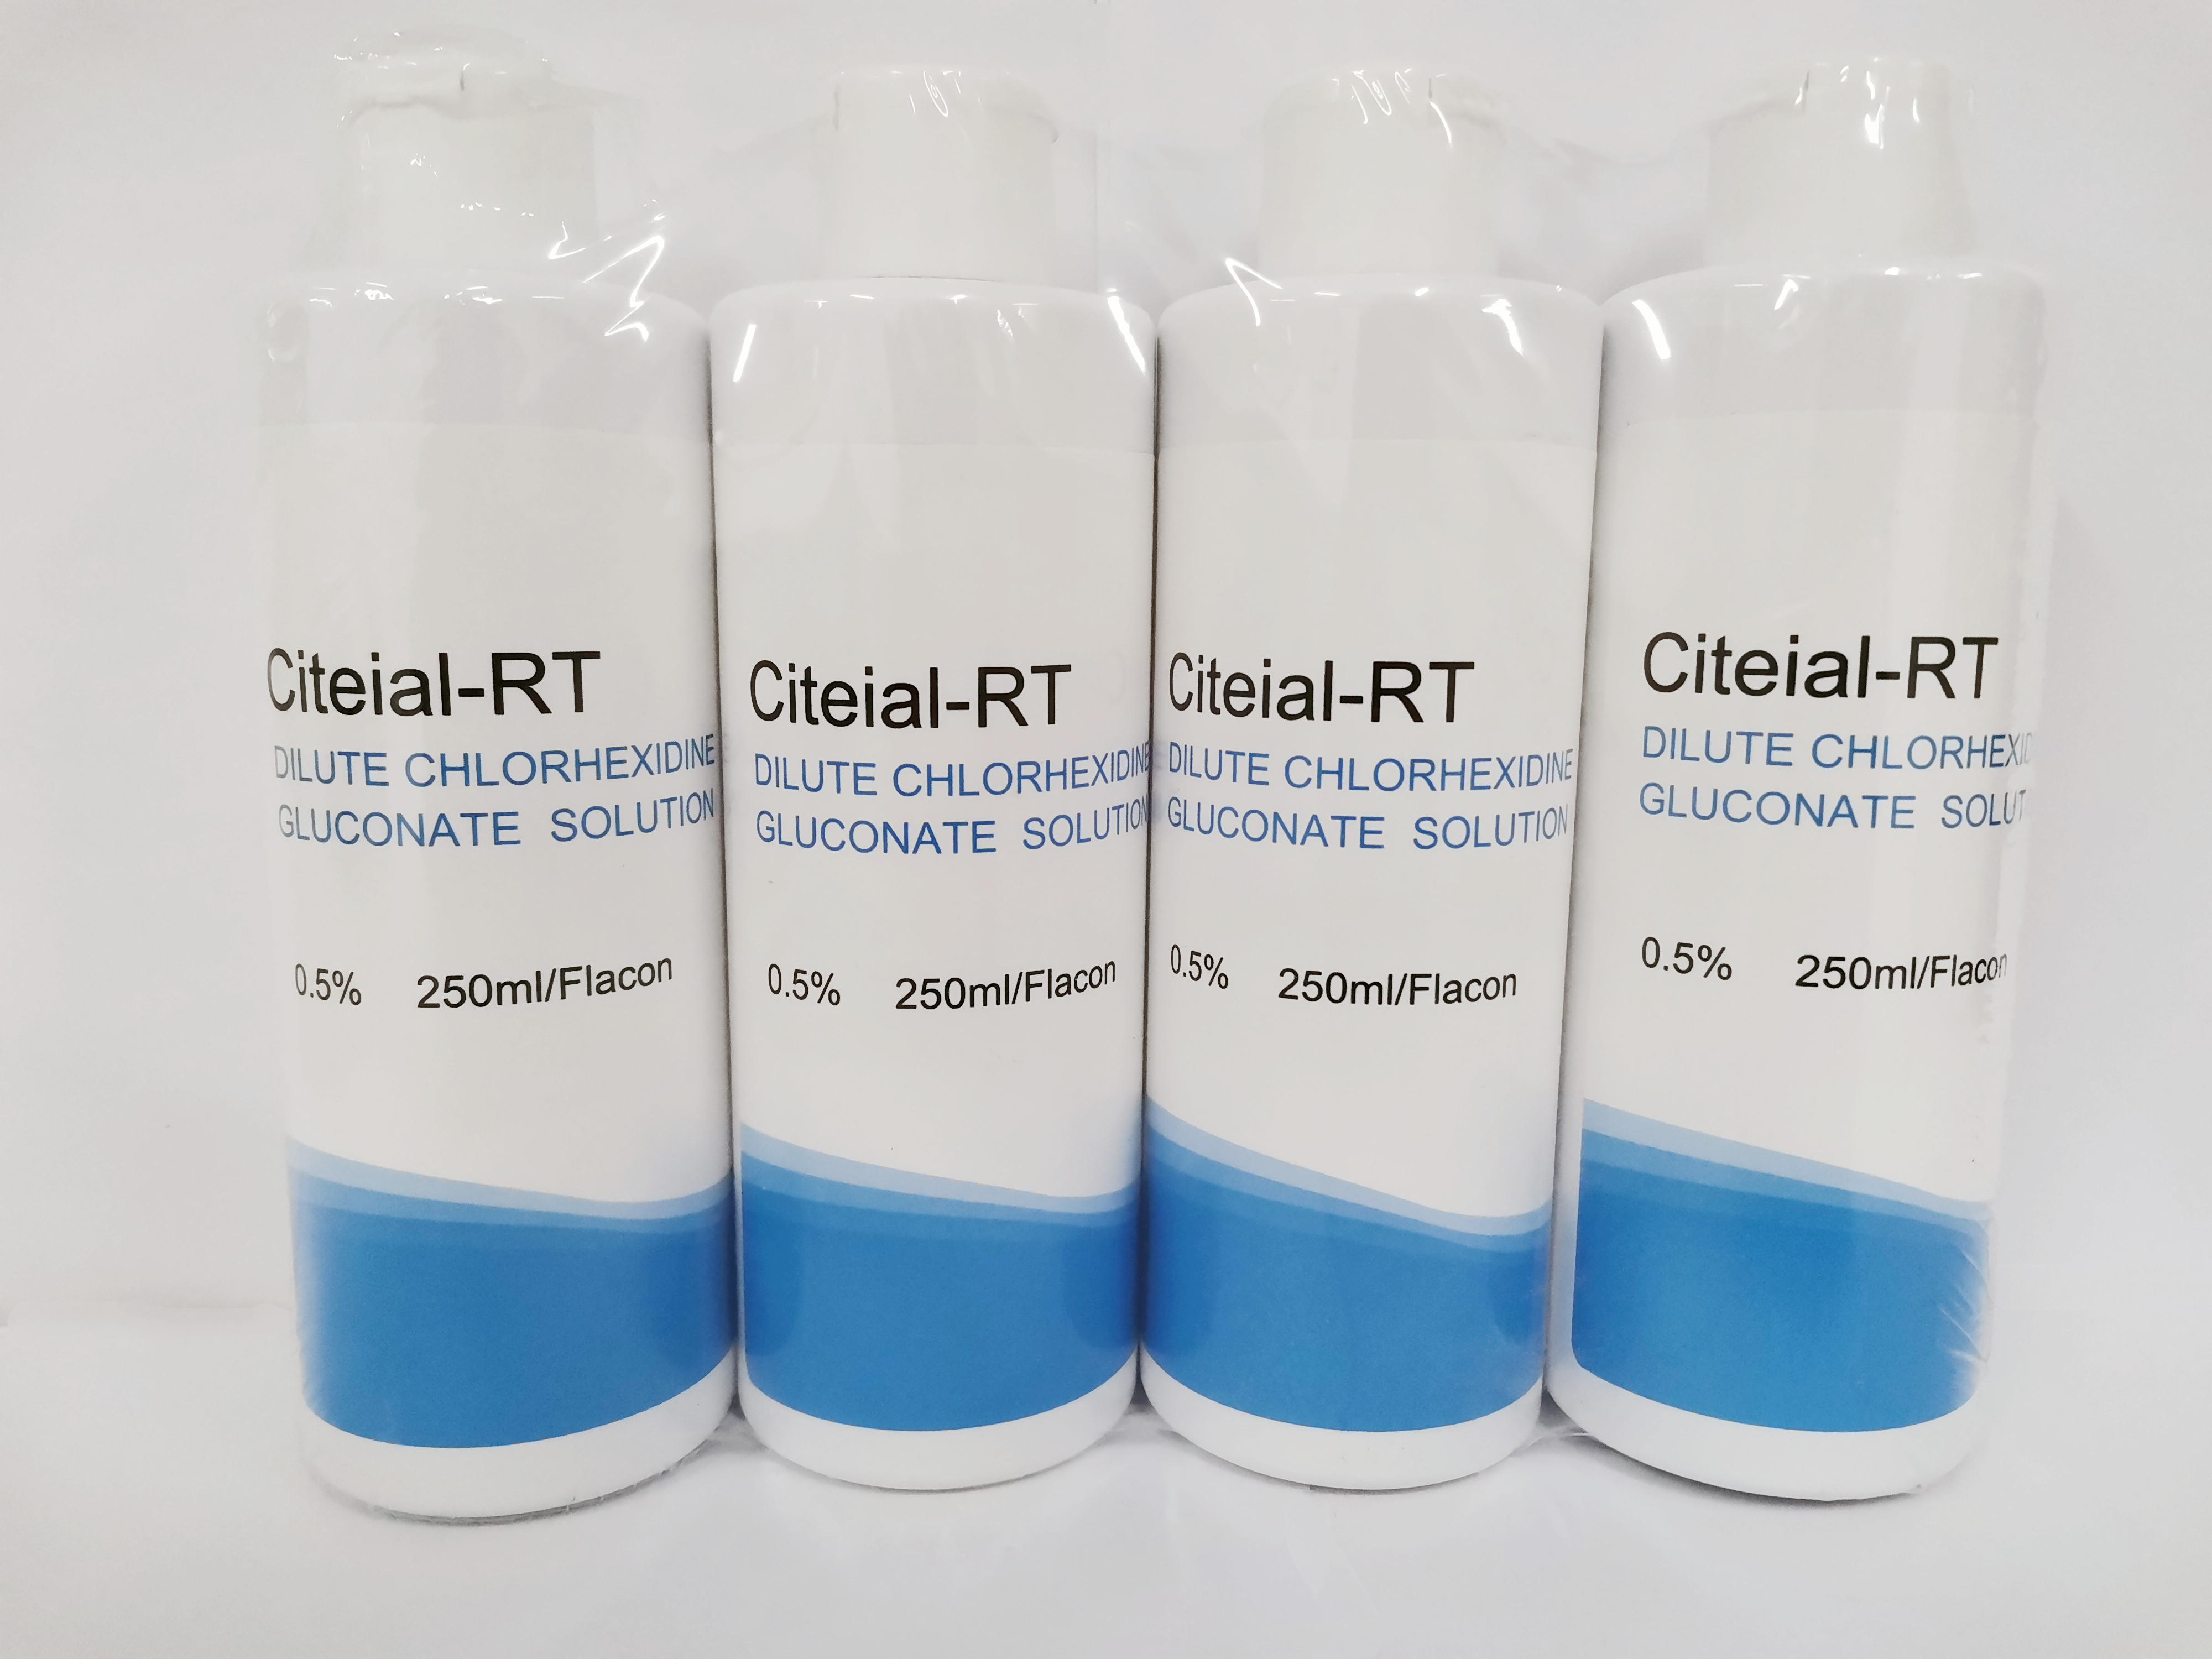 Dilute Chlorhexidine Gluconate Solution 0.5%  250ml/Flacon Featured Image